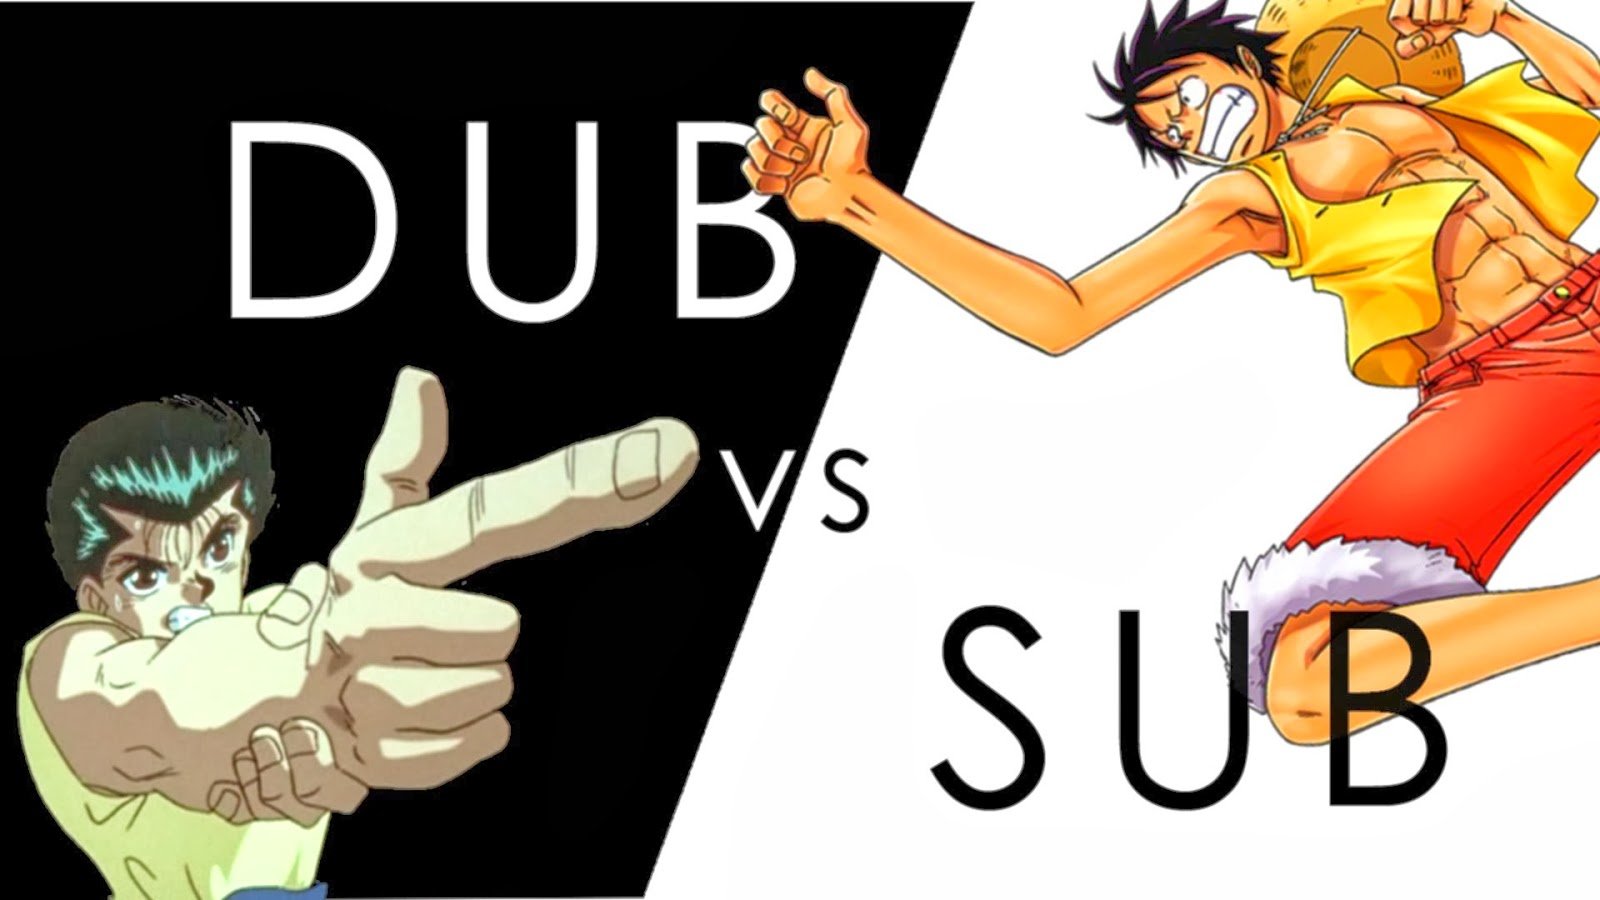 Dub vs Sub is Pointless